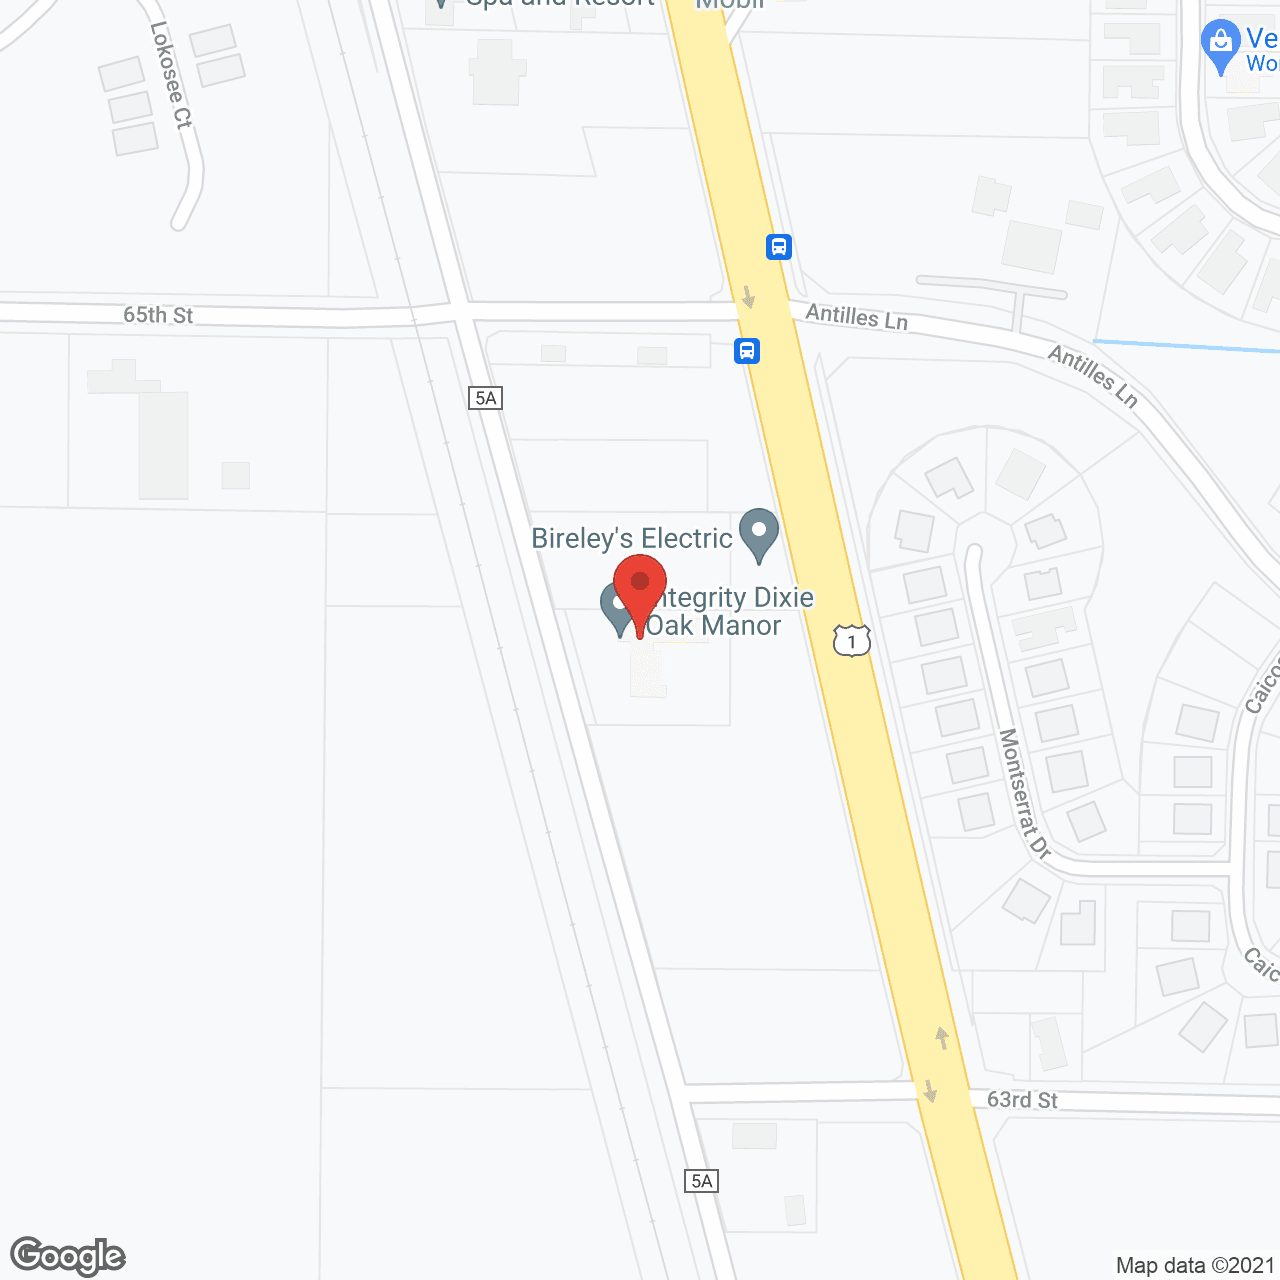 Dixie Oak Manor in google map